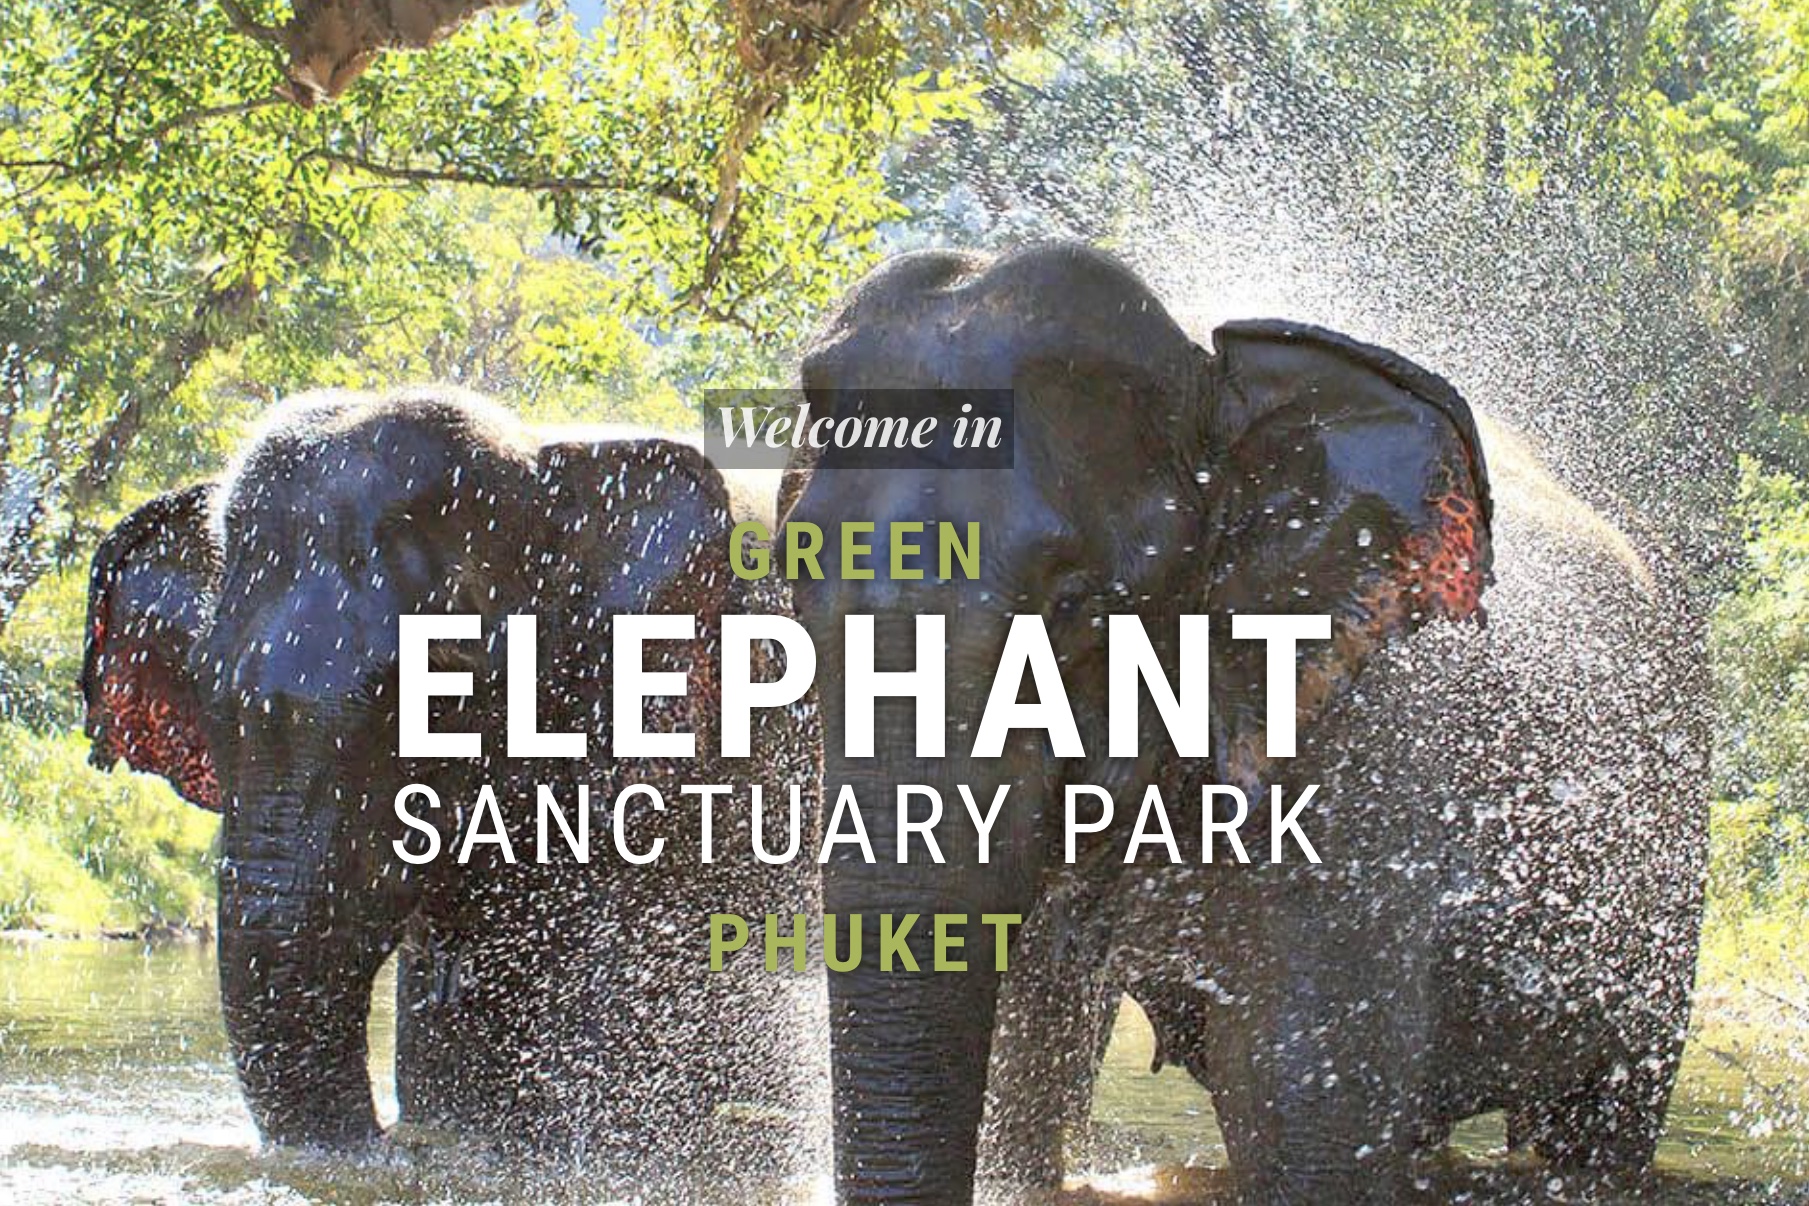 Phuket Elephant Sanctuary. Elefante Beach Phuket. Green Elephant Sanctuary Урс фехра Urs Fehr. Green elephant sanctuary